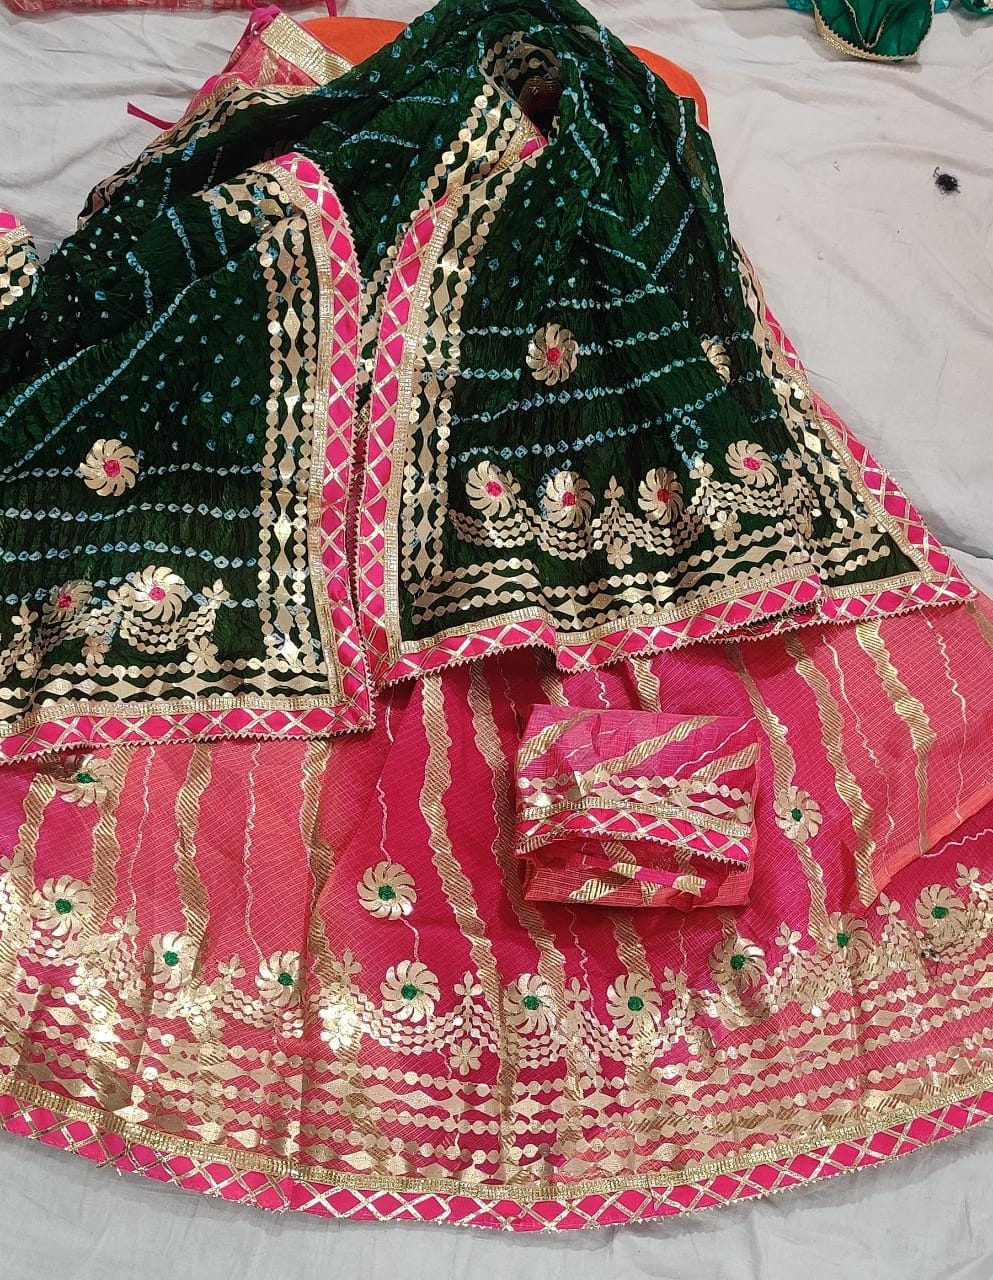 Pin by chief engineer on Good morning flowers | Lehenga skirt, Rajputi  dress, Chiffon saree